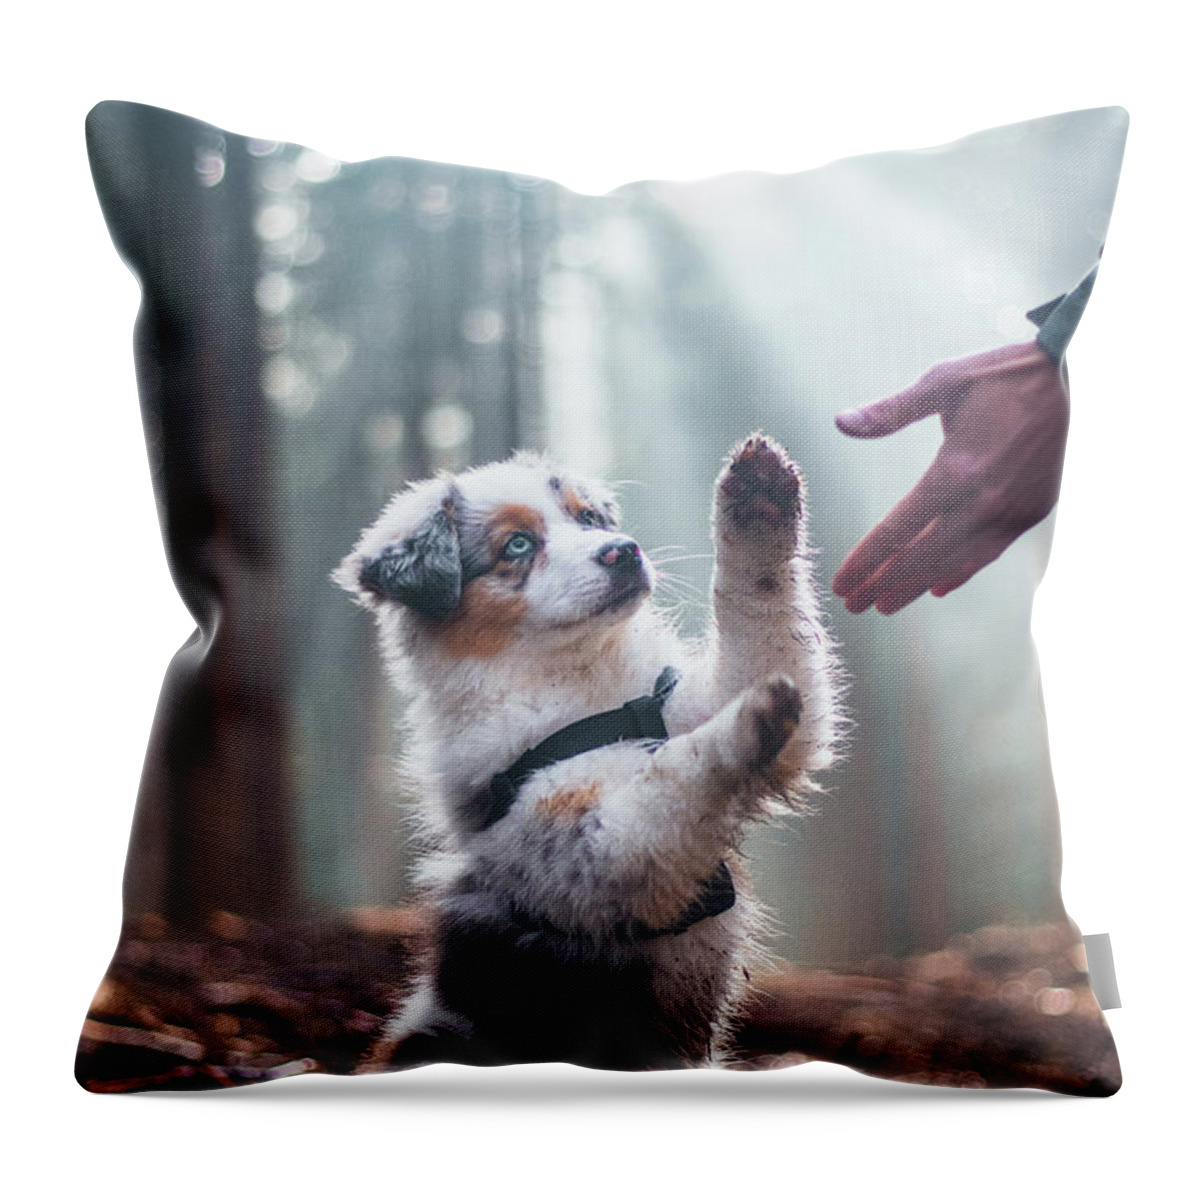 Breed Throw Pillow featuring the photograph Australian Shepherd puppy by Vaclav Sonnek